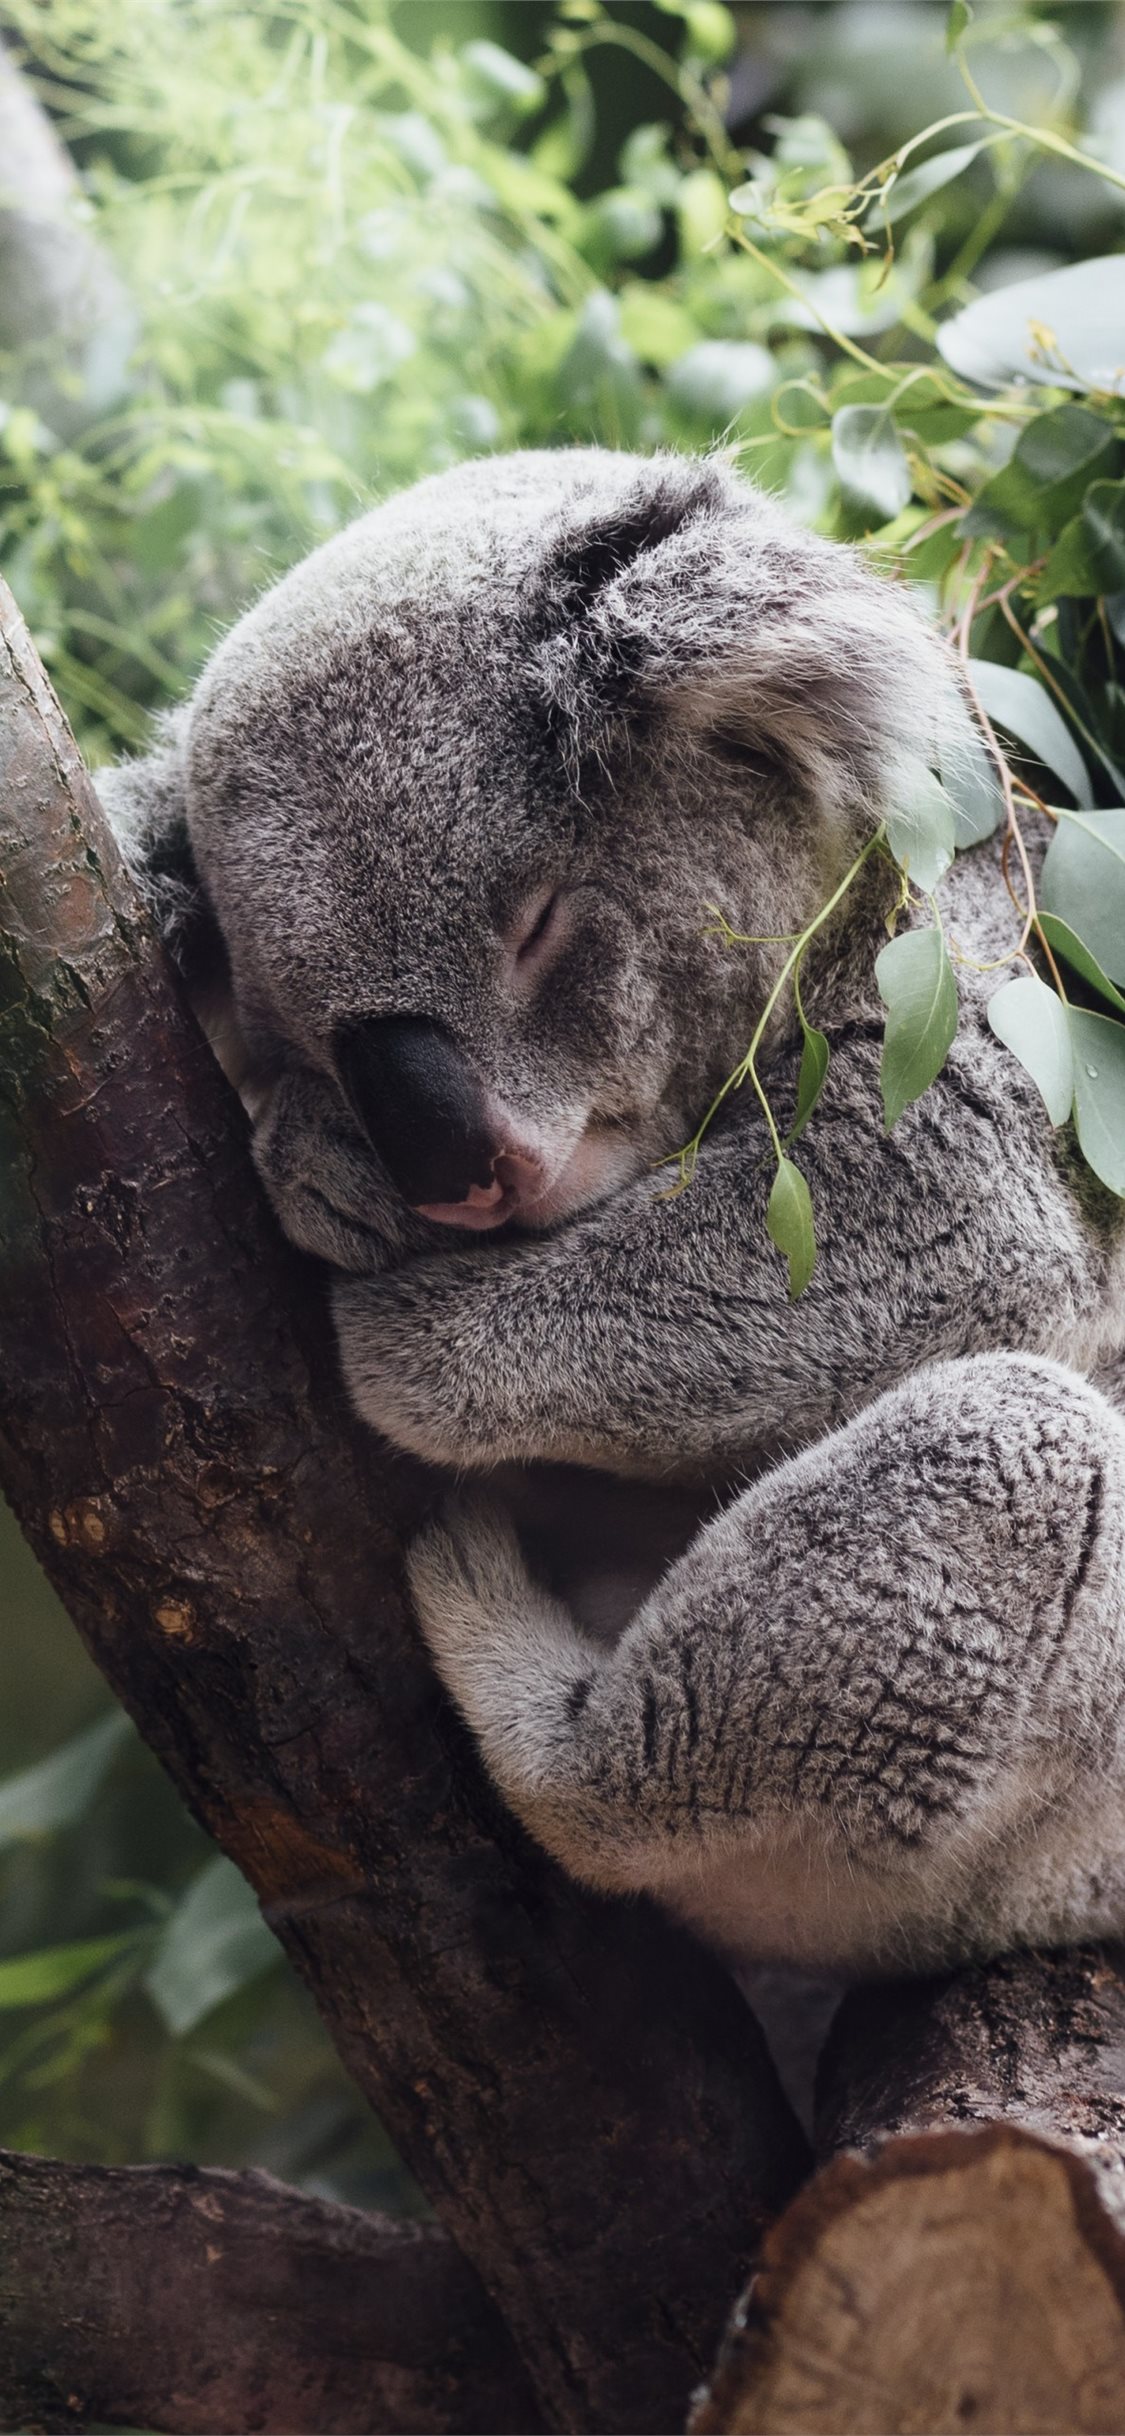 36705 Koala Background Images Stock Photos  Vectors  Shutterstock